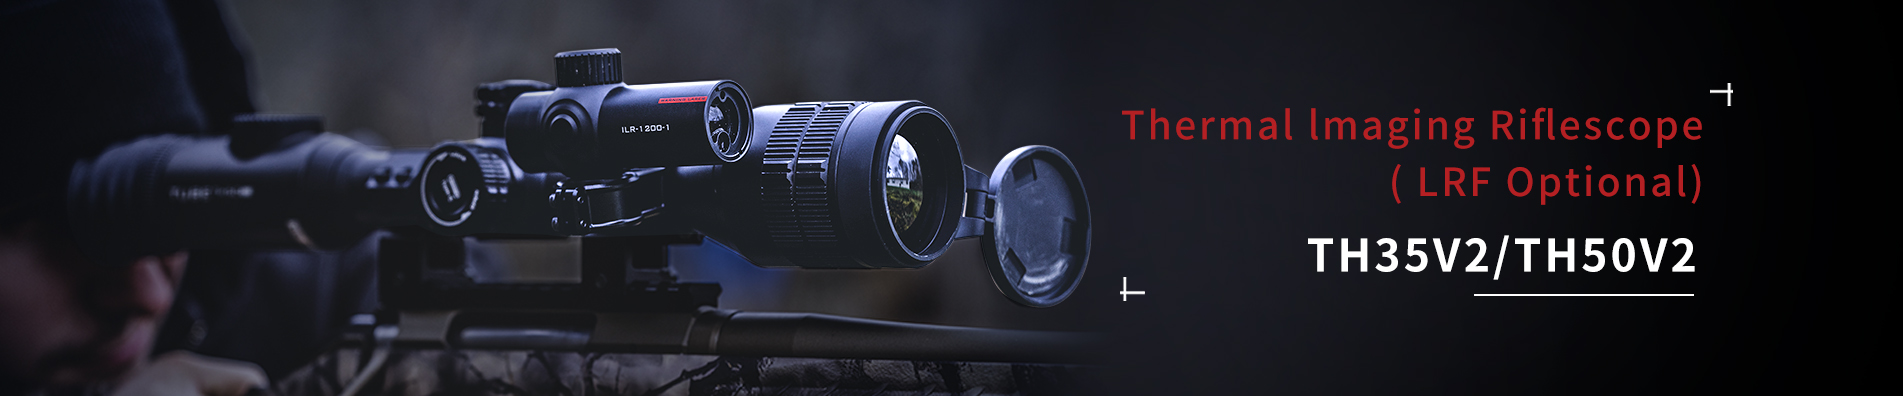 Thermal Imaging Riflescope Tube Series TH35V2/TH50V2